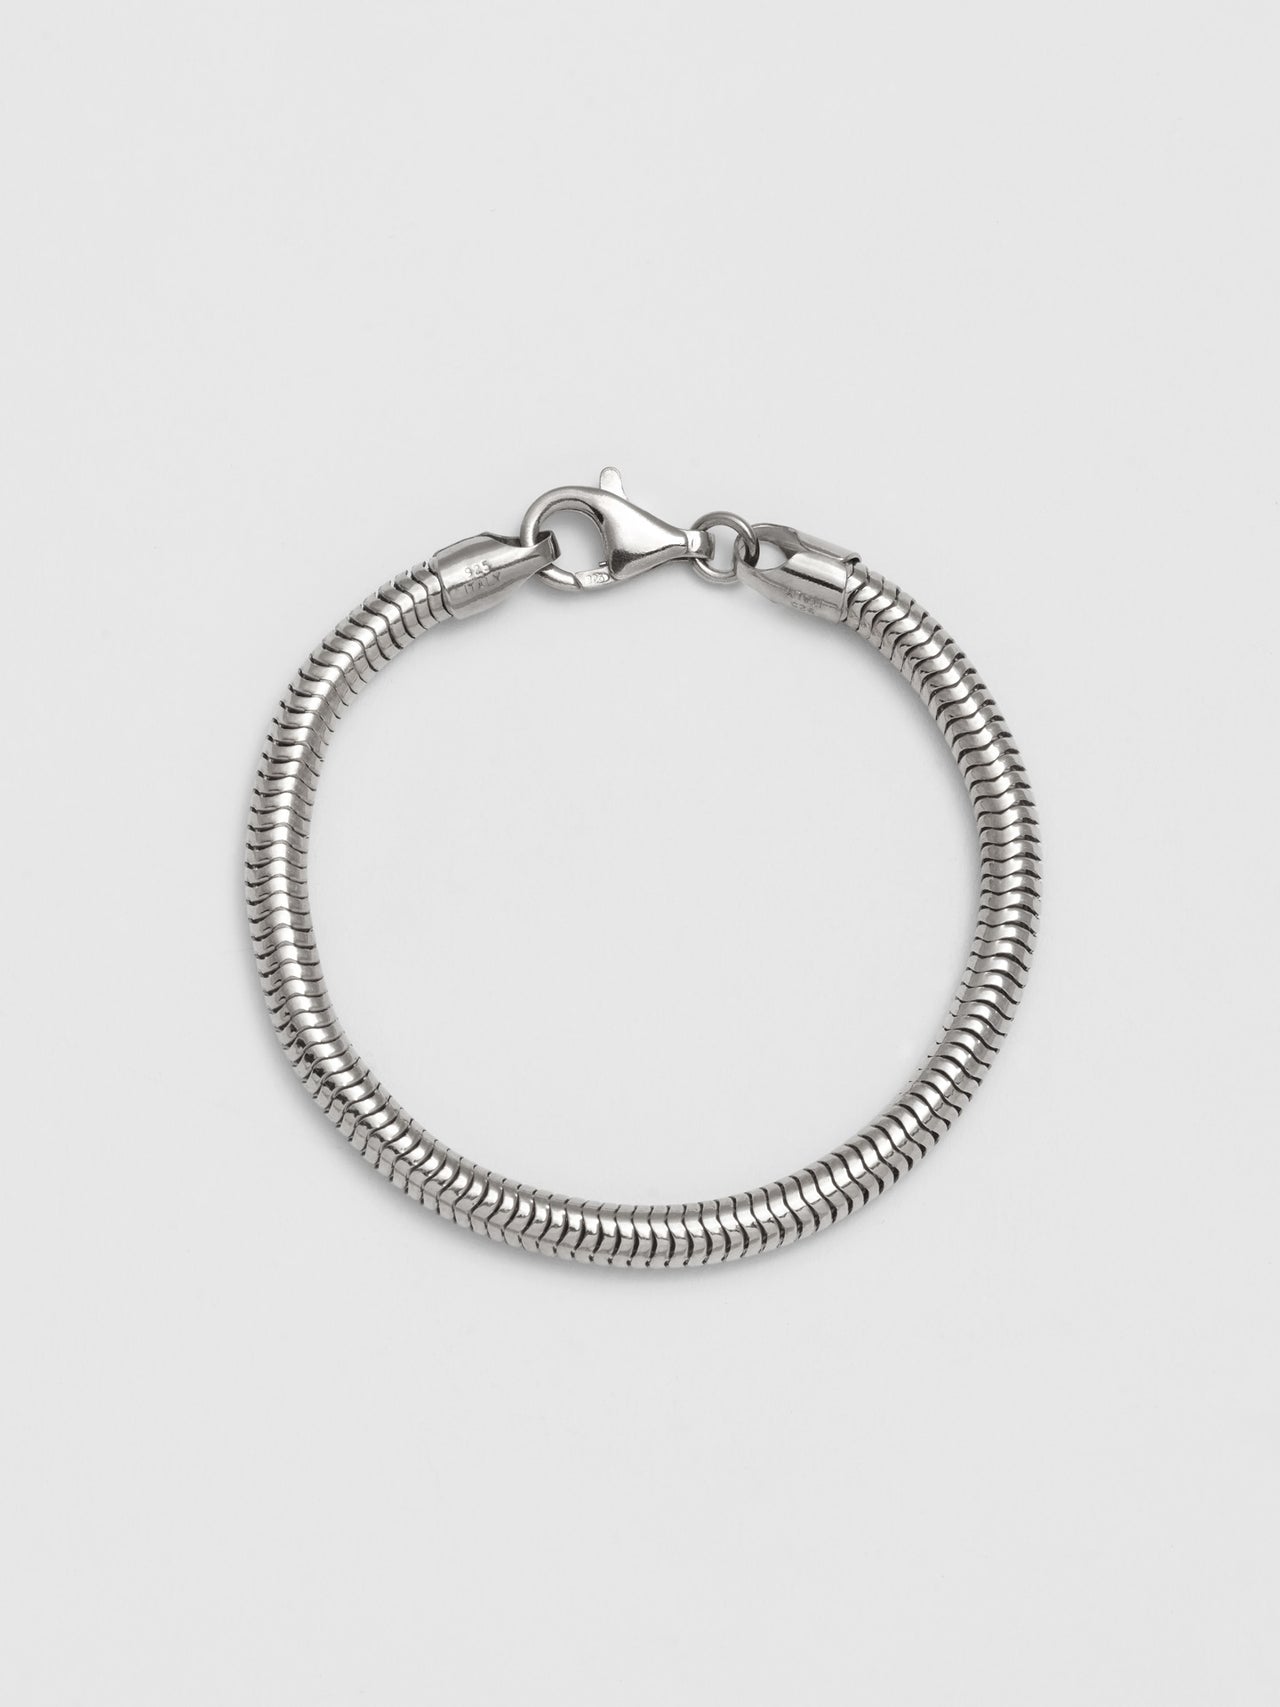 Zenith Bracelet: Sterling Silver Hollow Snake Chain Width: 4" Length: 7"